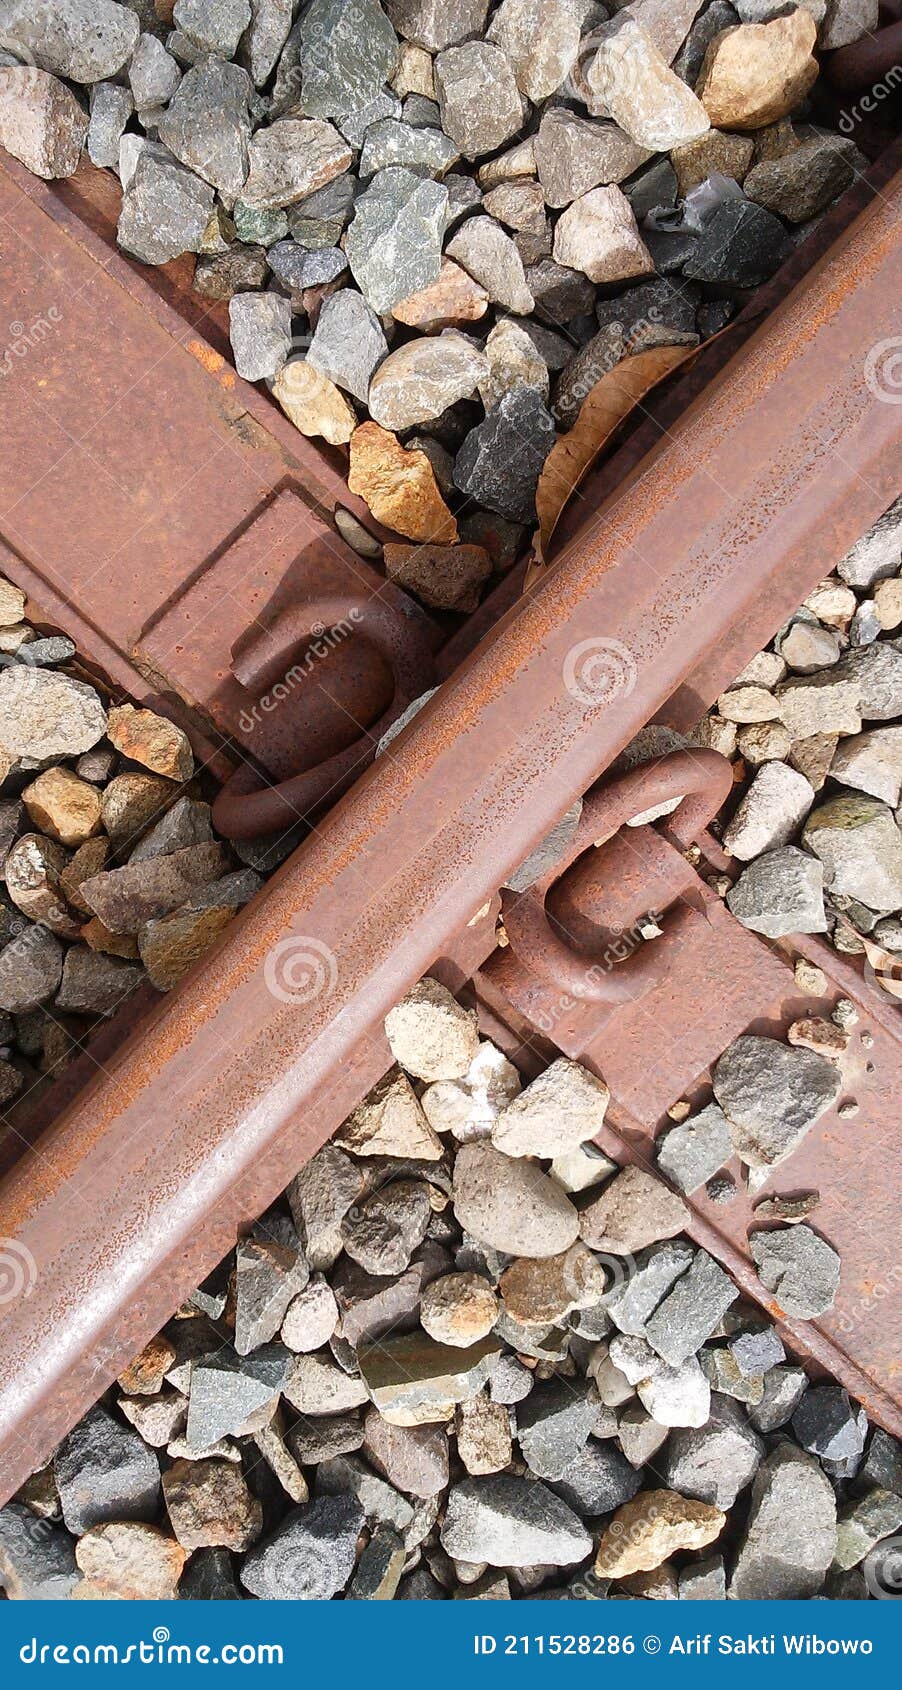 the rusty railroad tracks